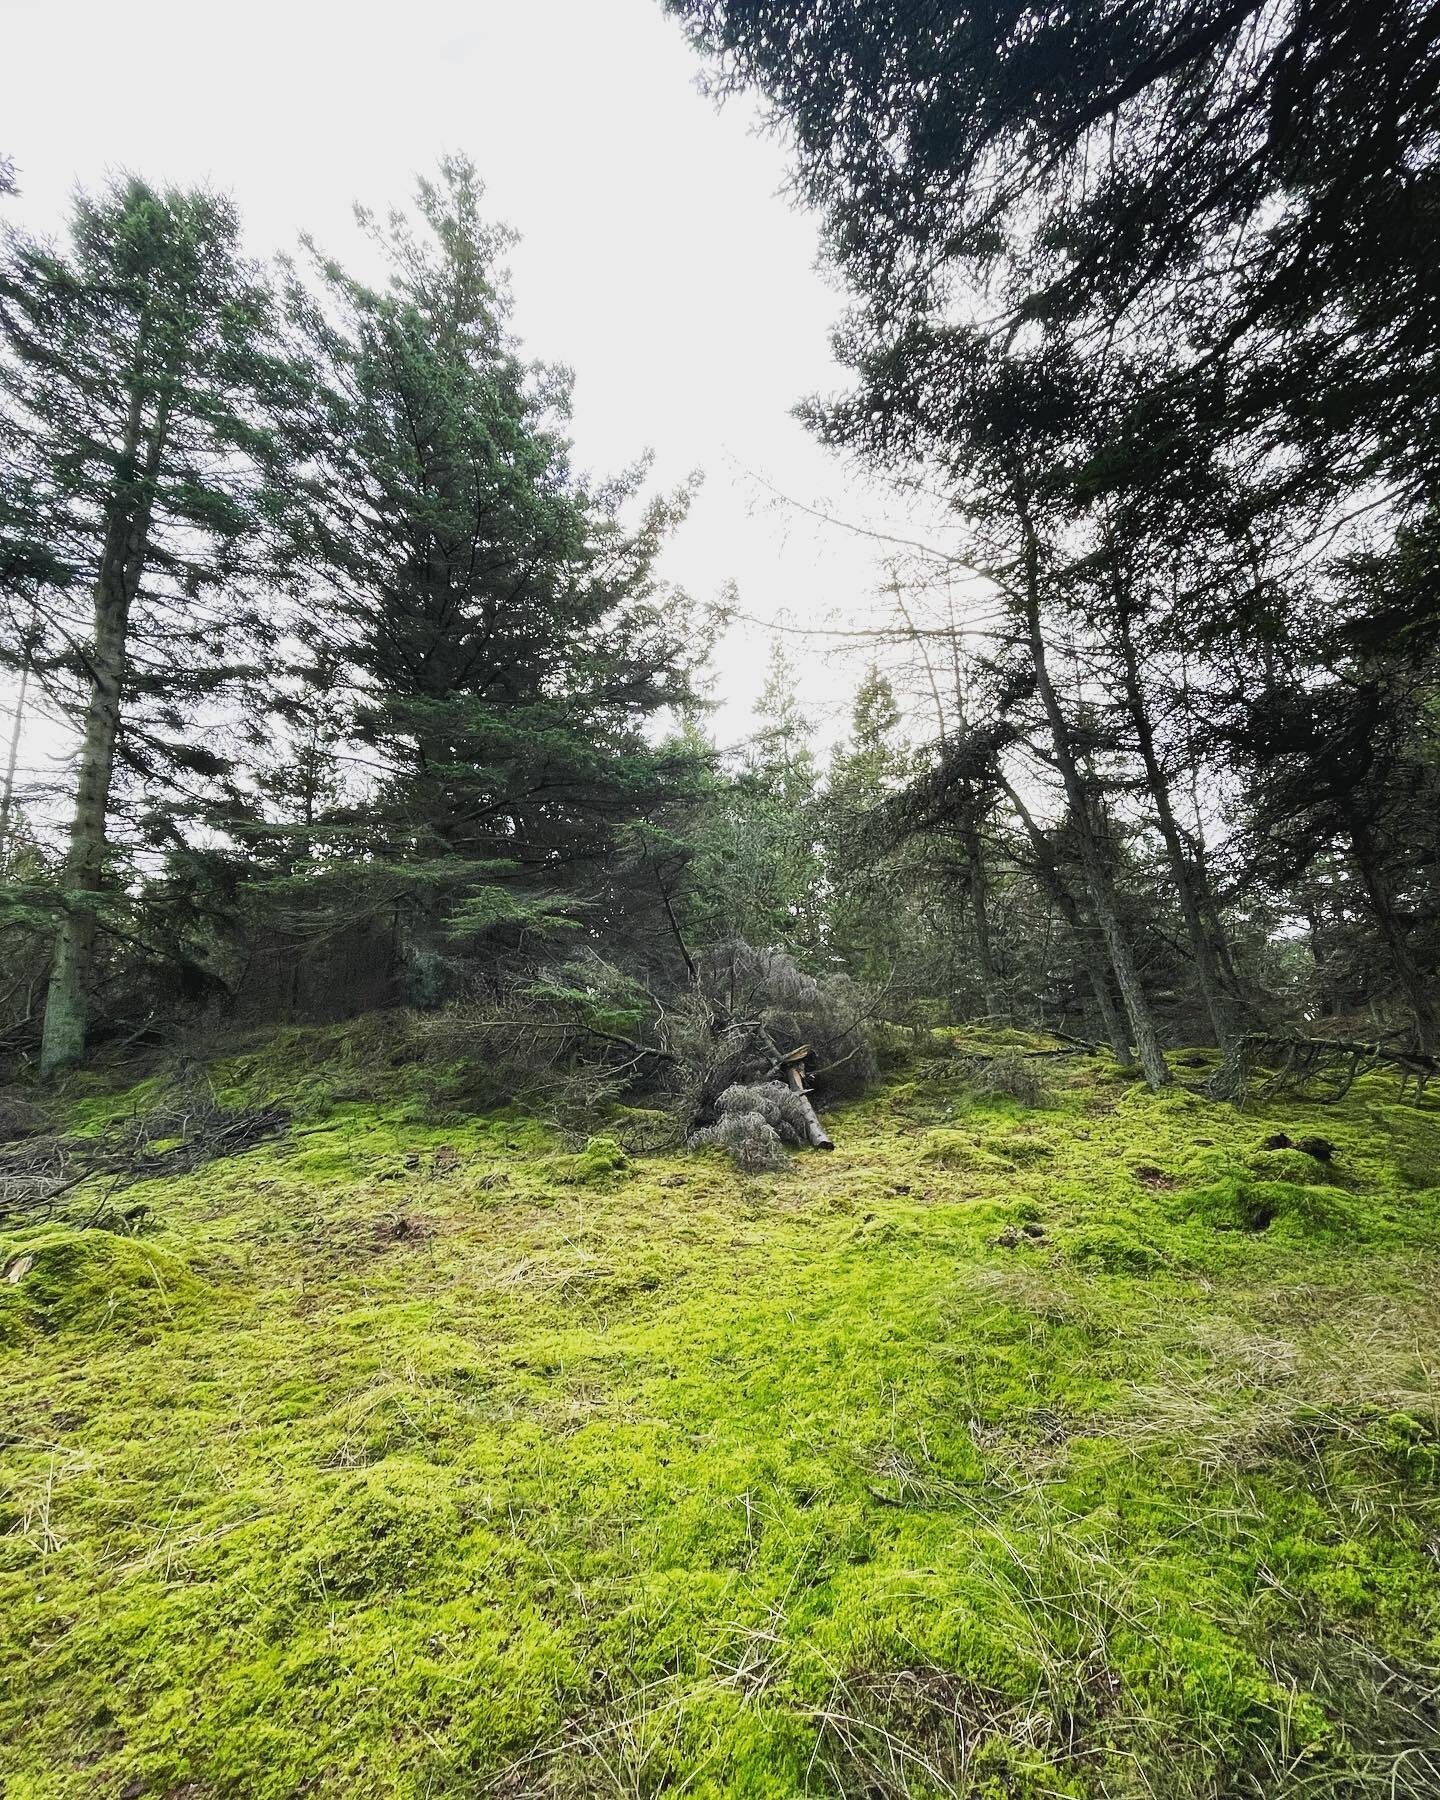 Forrest walk💚💚💚
.
.
.
.

#beautifulwinter #nordicliving #nordiccolours #quietness #innerpeace #denmark2022